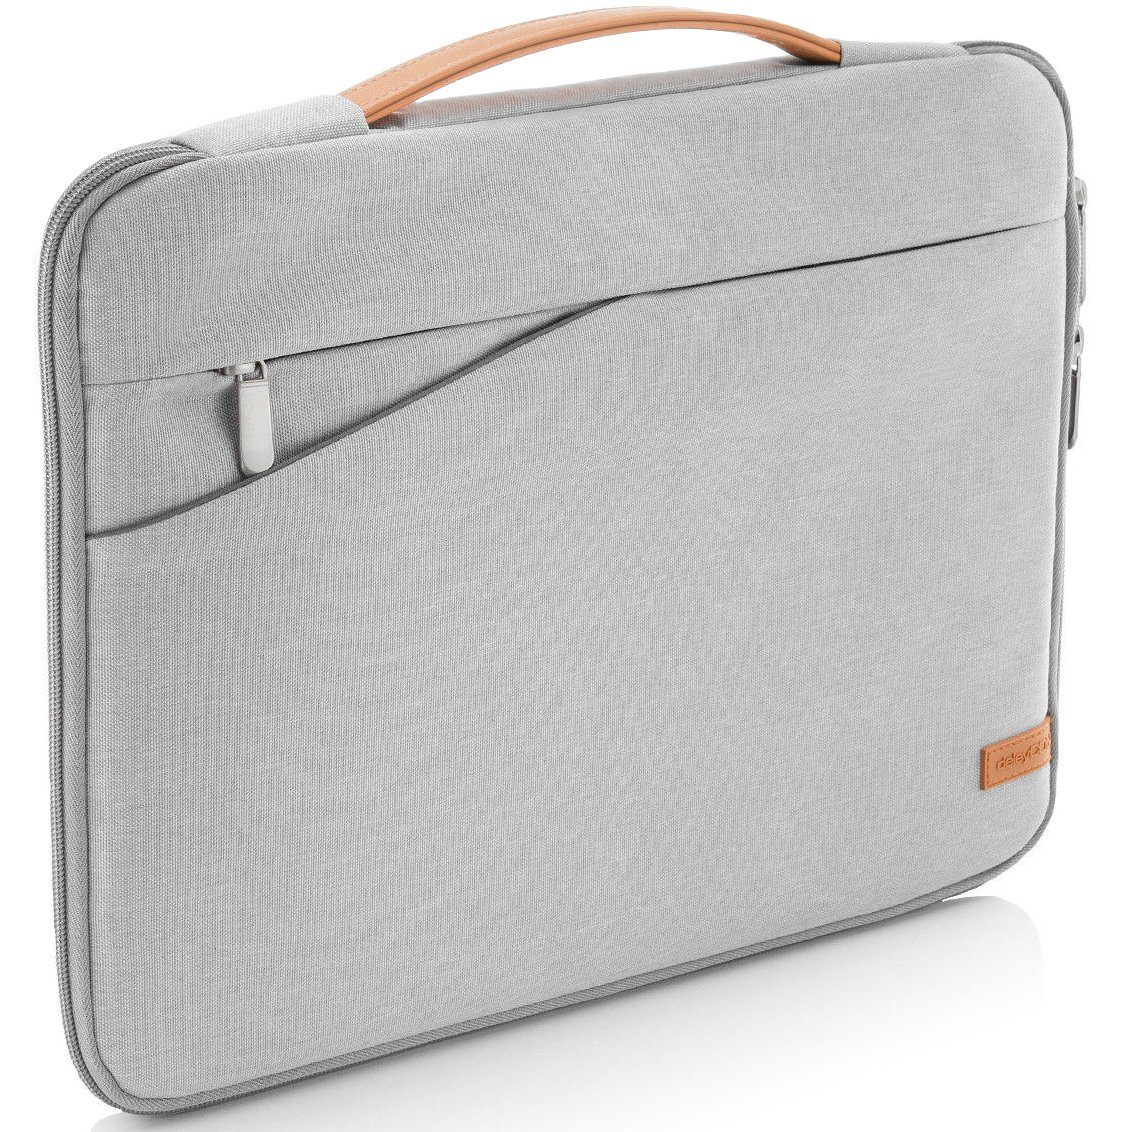 deleyCON Businesstasche 15,6“ (39,6cm) Tasche MAC deleyCON Laptop Zoll Netbook bis Notebook